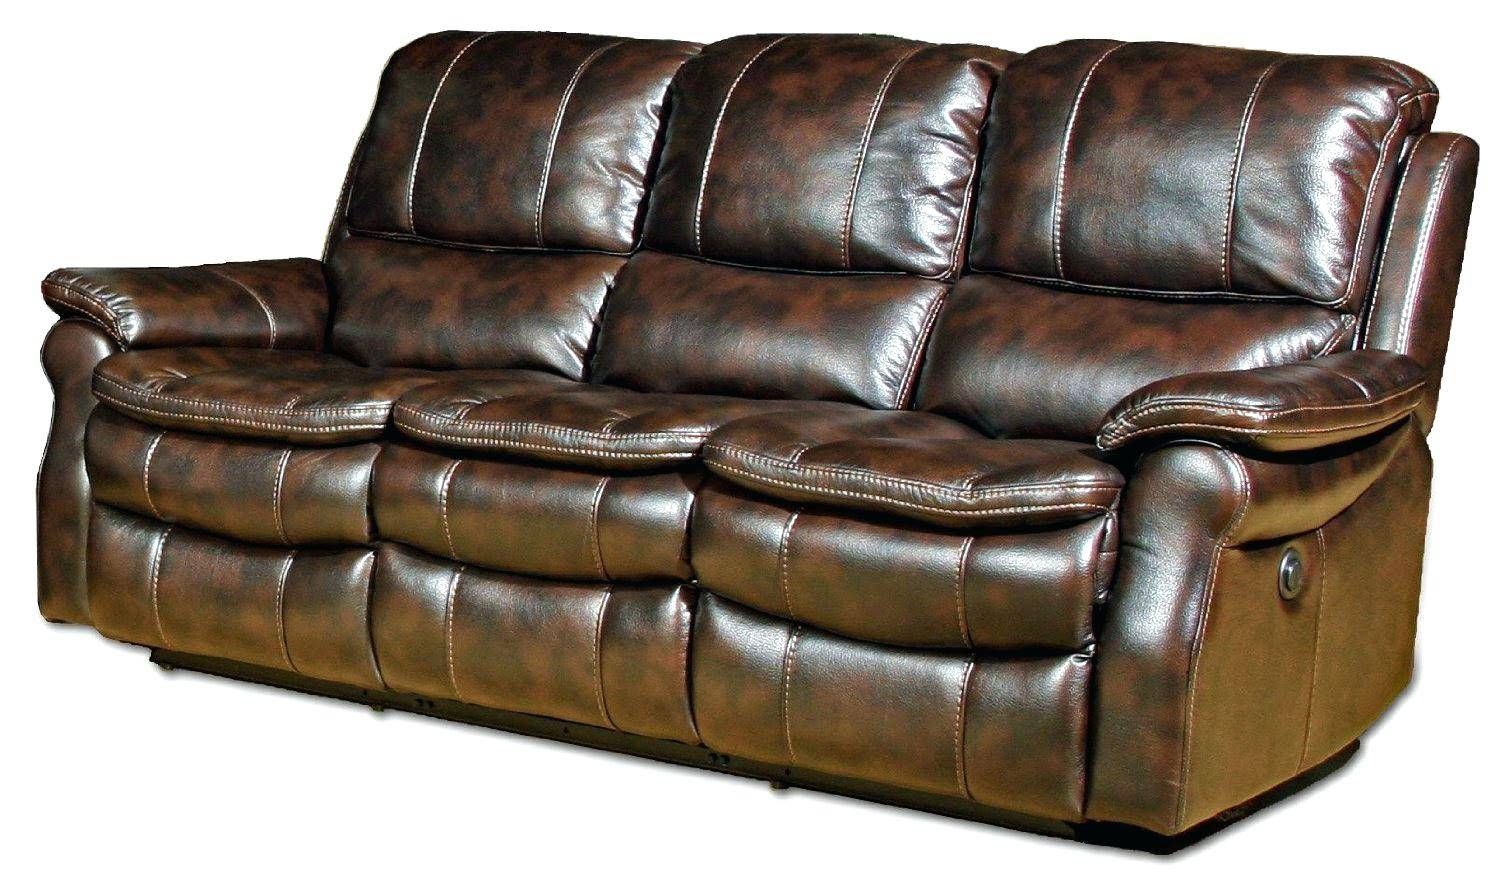 pocket sprung leather recliner sofa